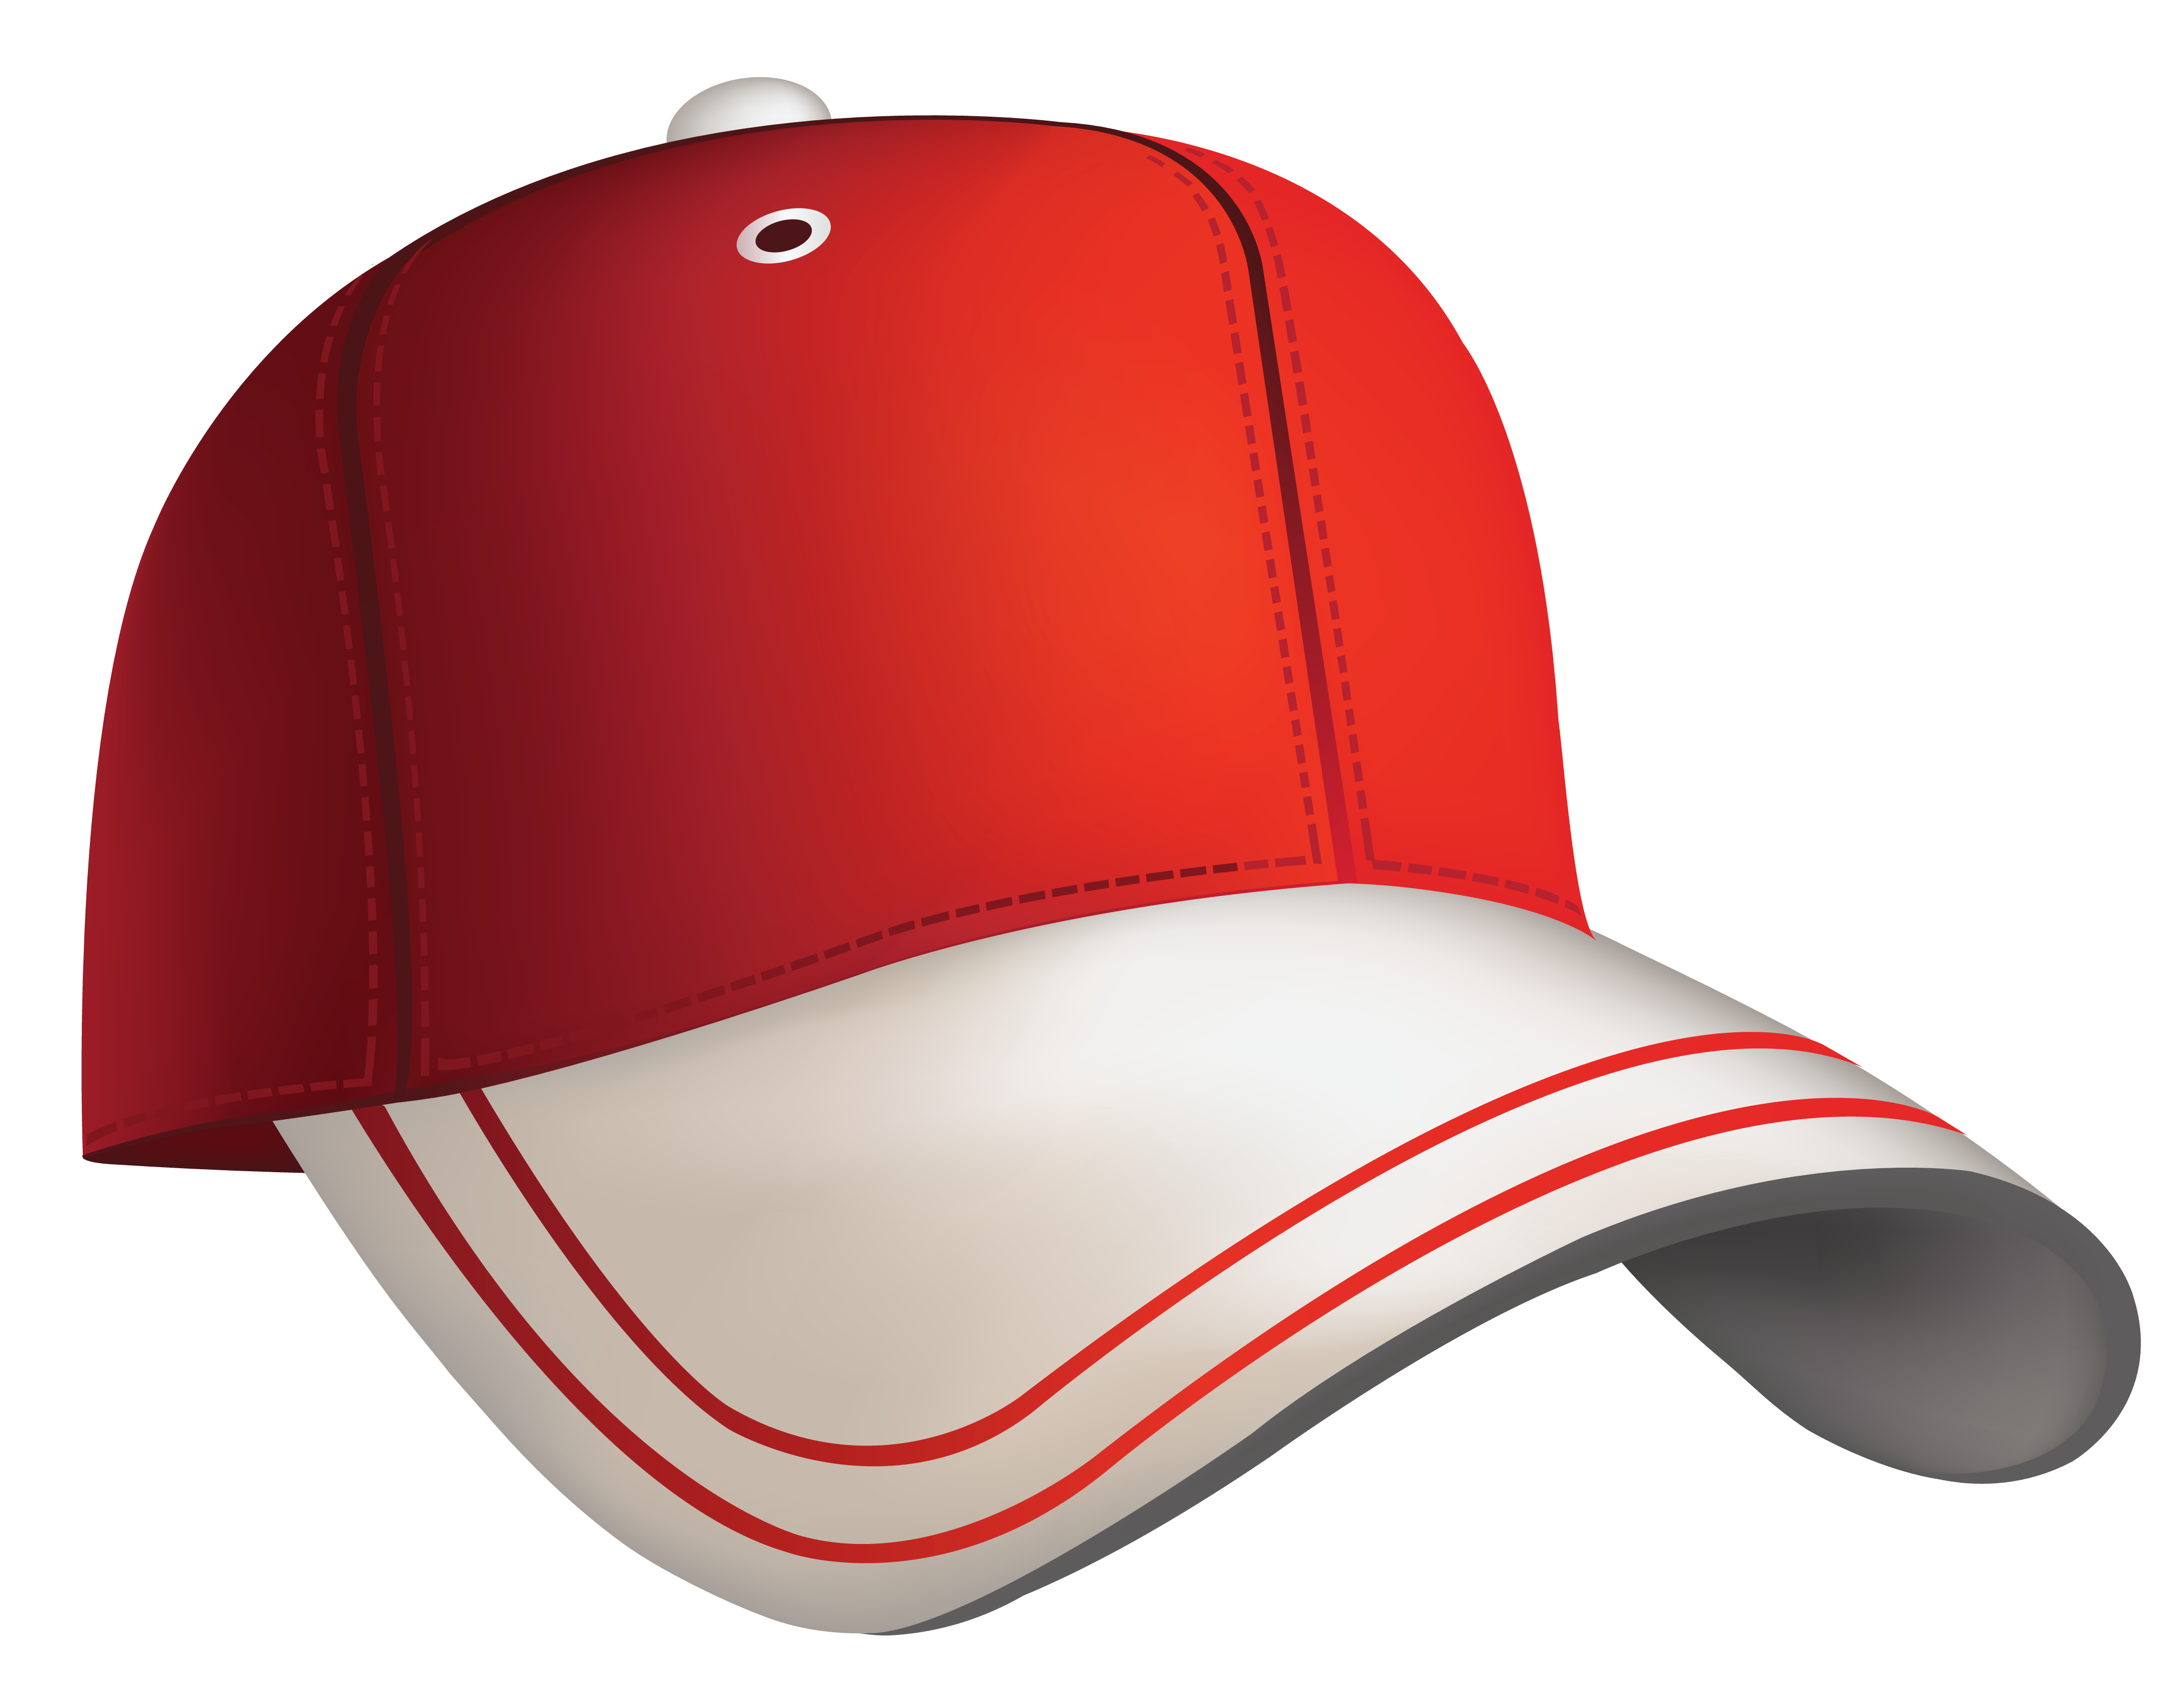 Red Baseball Cap Clipart PNG Image - PurePNG | Free transparent CC0 PNG ...